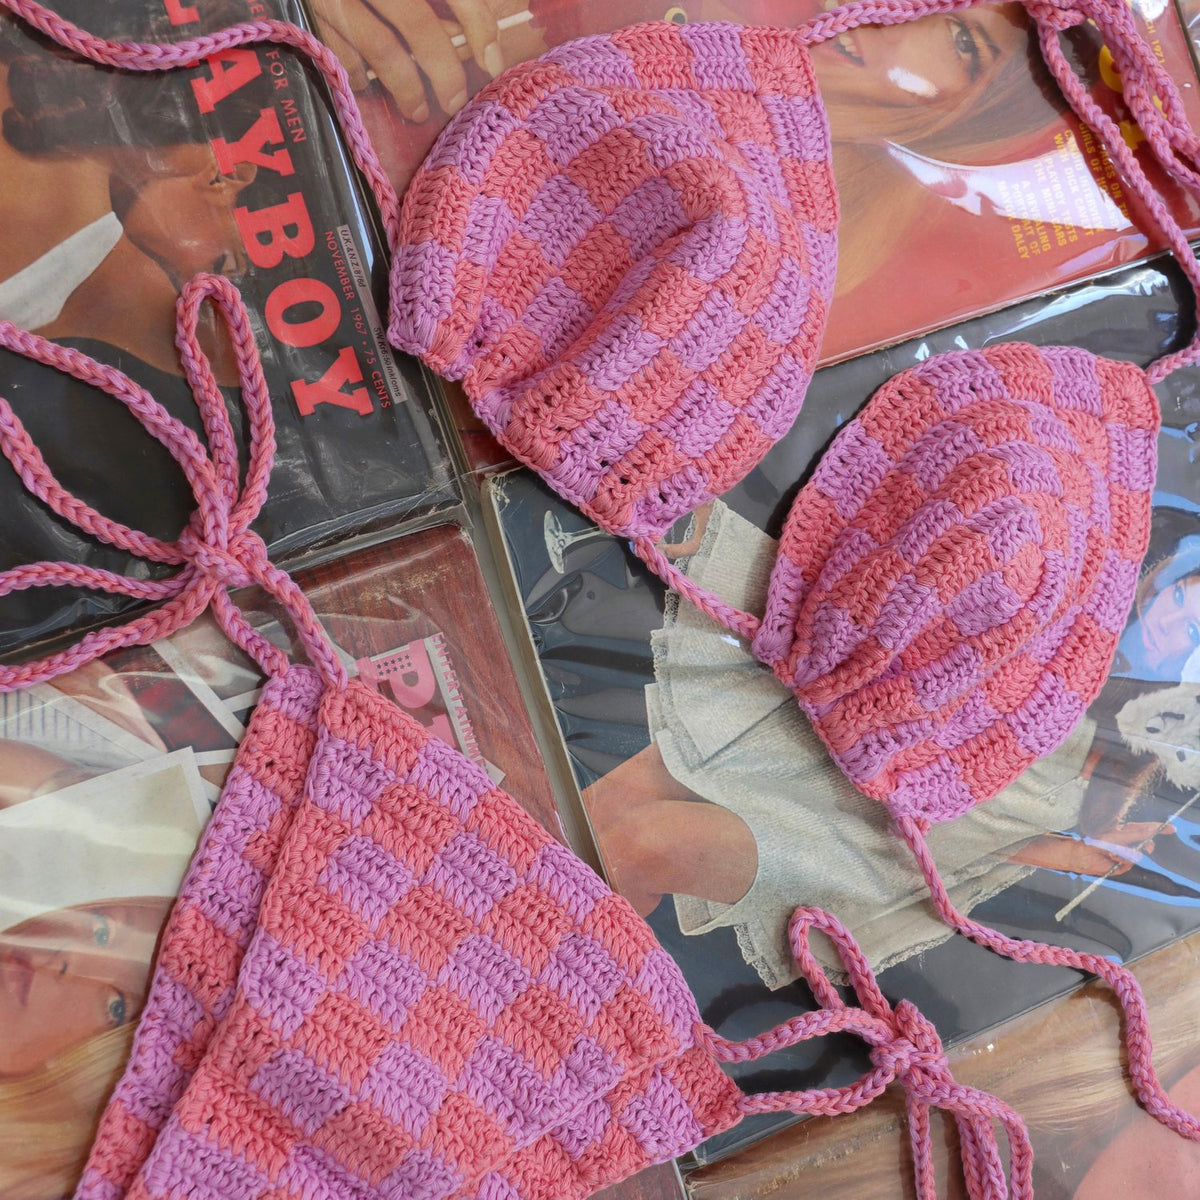 Kia Cotton Candy Crochet Handmade Bikini Set